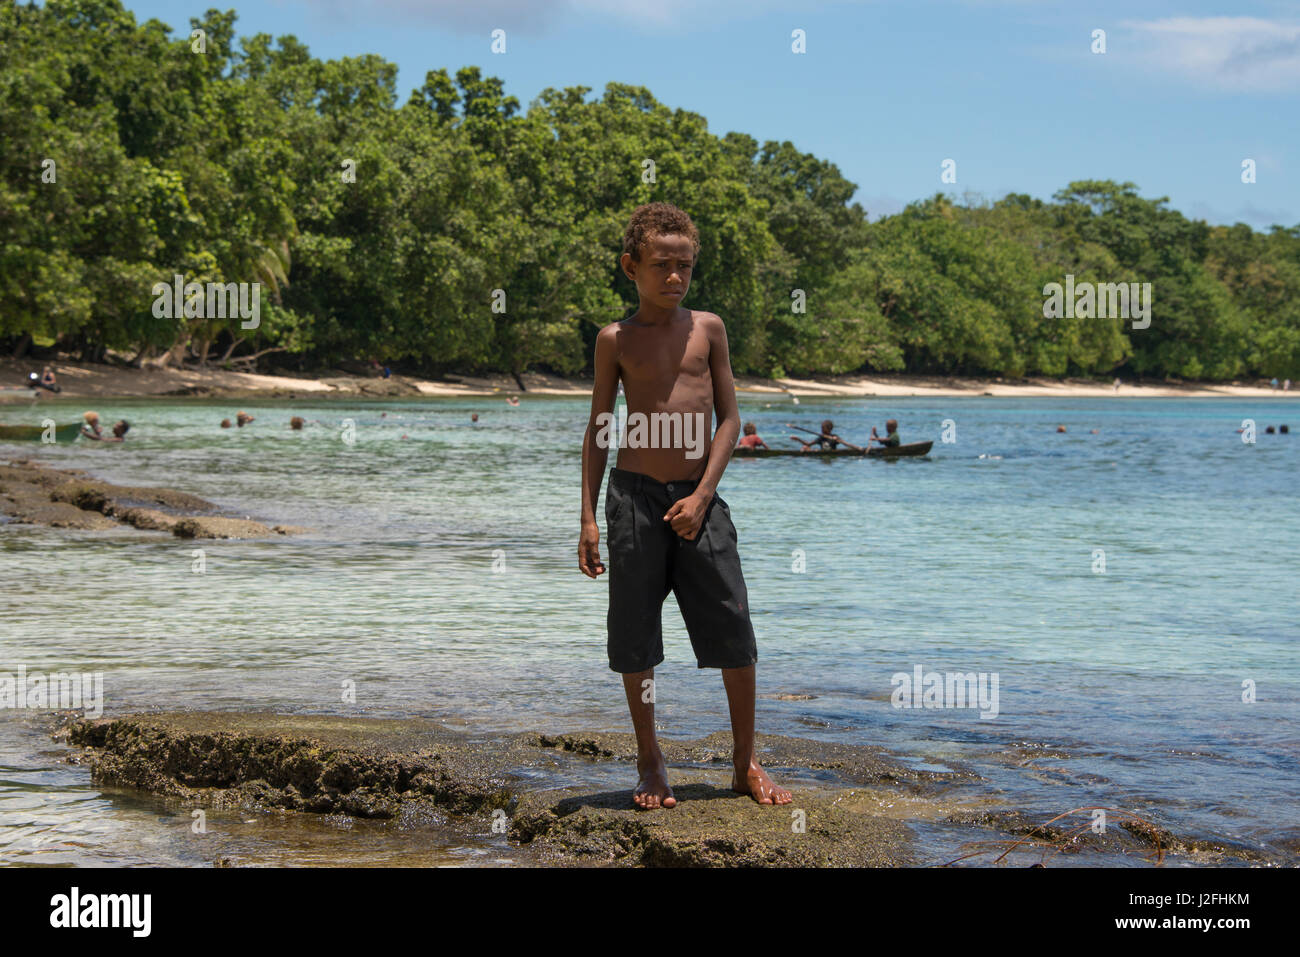 Melanesia Makira Ulawa Province Solomon Islands Island Of Owaraha Or